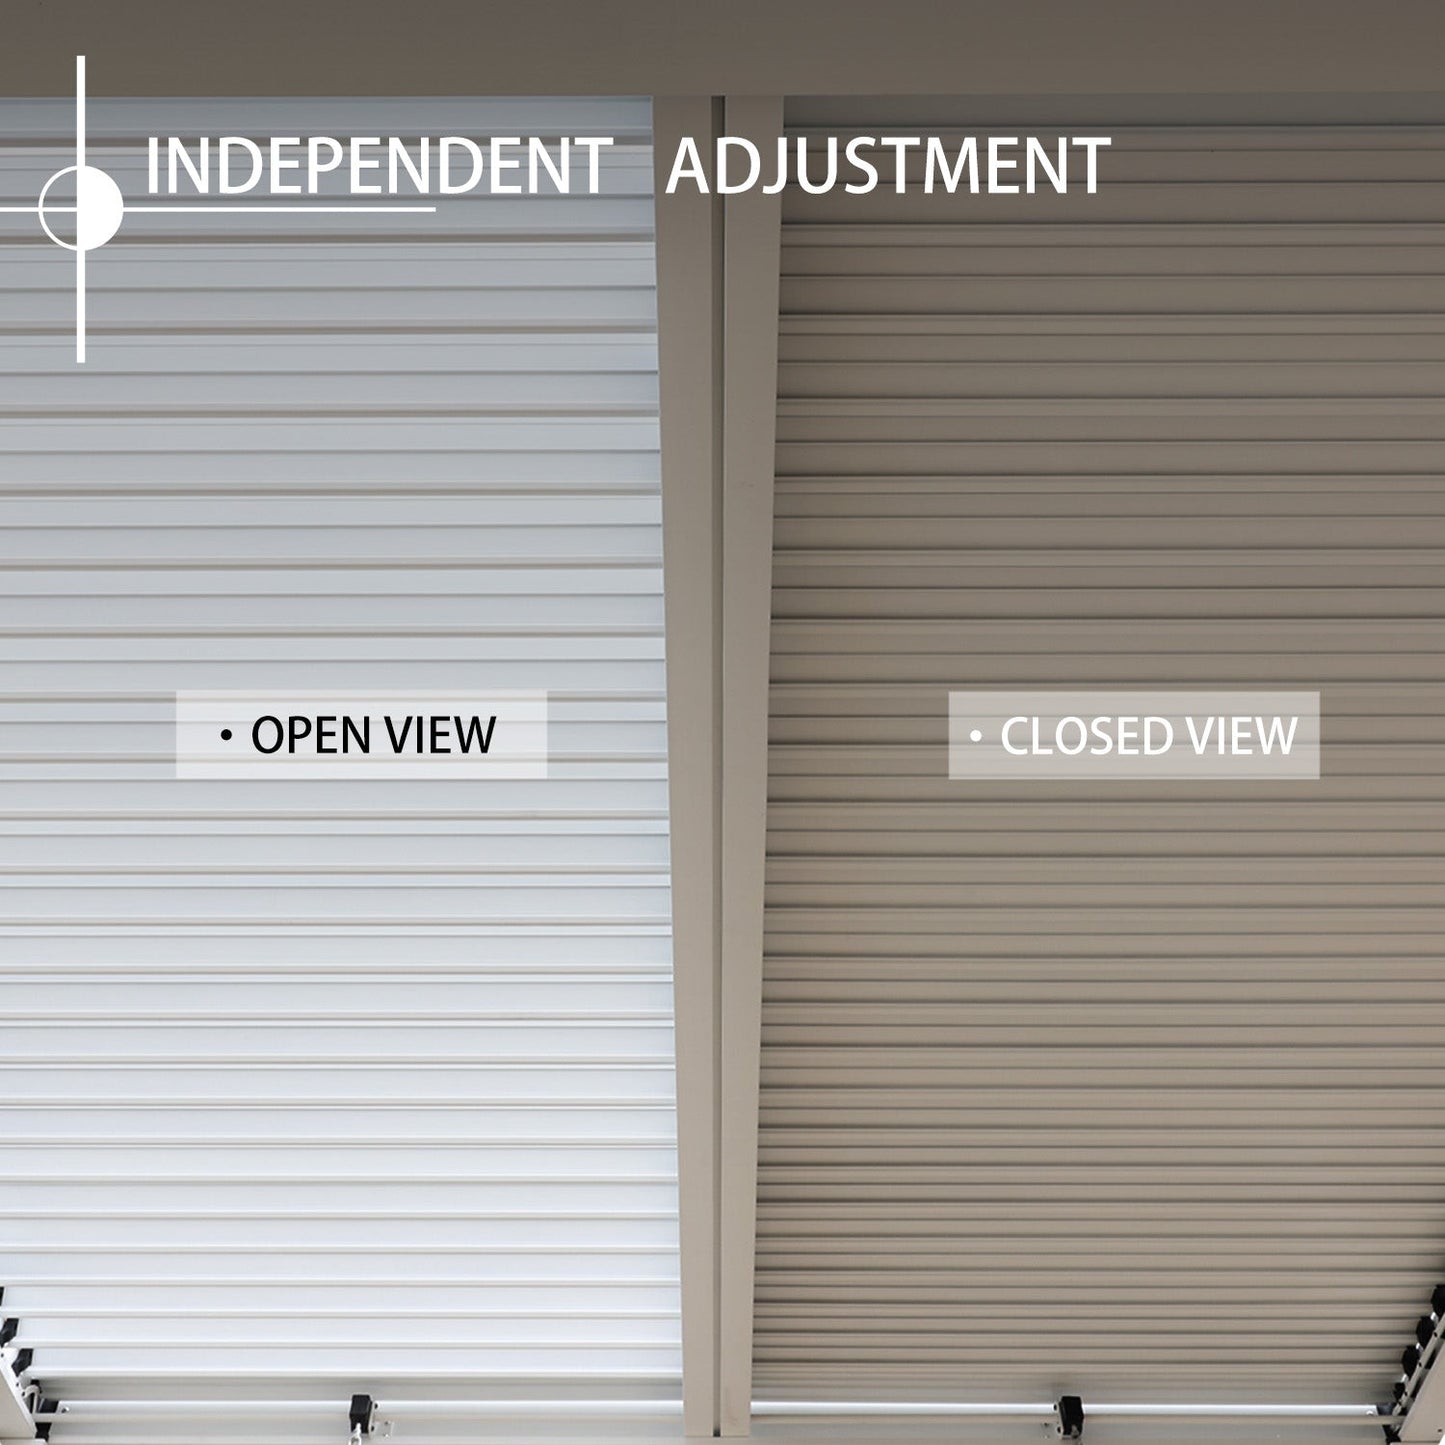 20 x 10 ft. Outdoor Aluminum Louvered Pergola Sun Shade Shelter with Adjustable Panels- White Pergola Aoodor LLC   